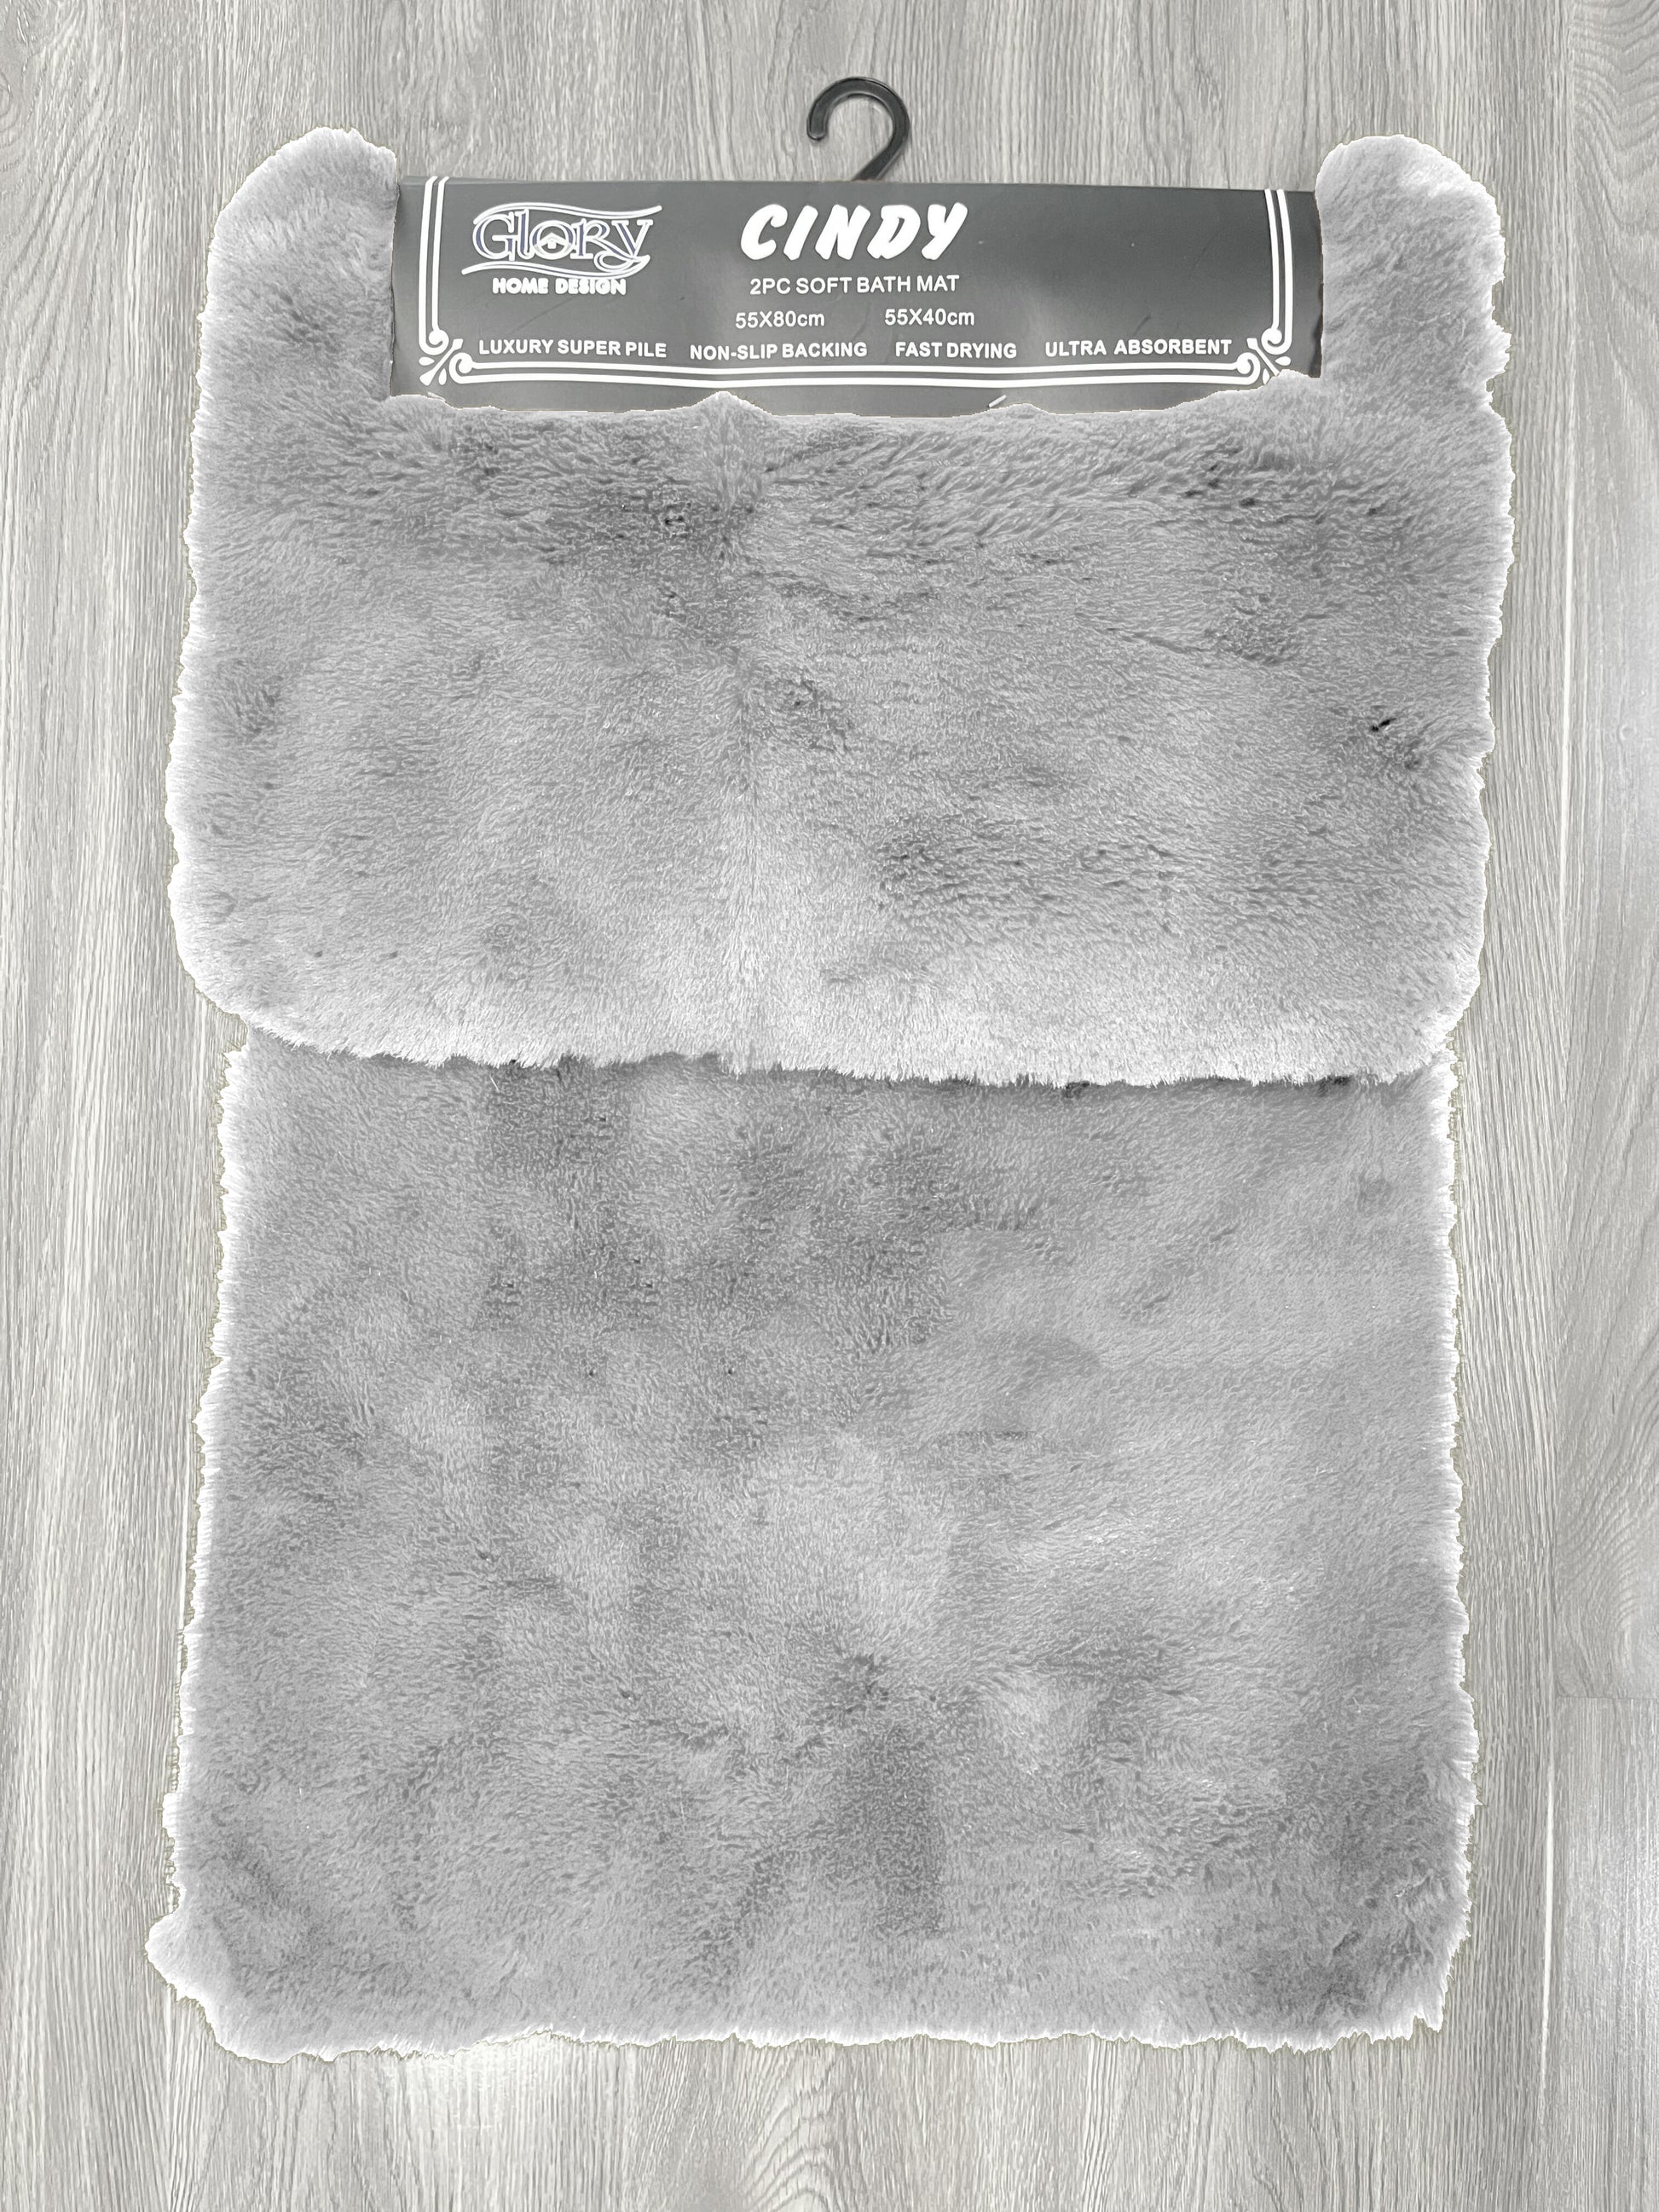 2 Piece Fur Feel Bathmat Set - Glory Home Design